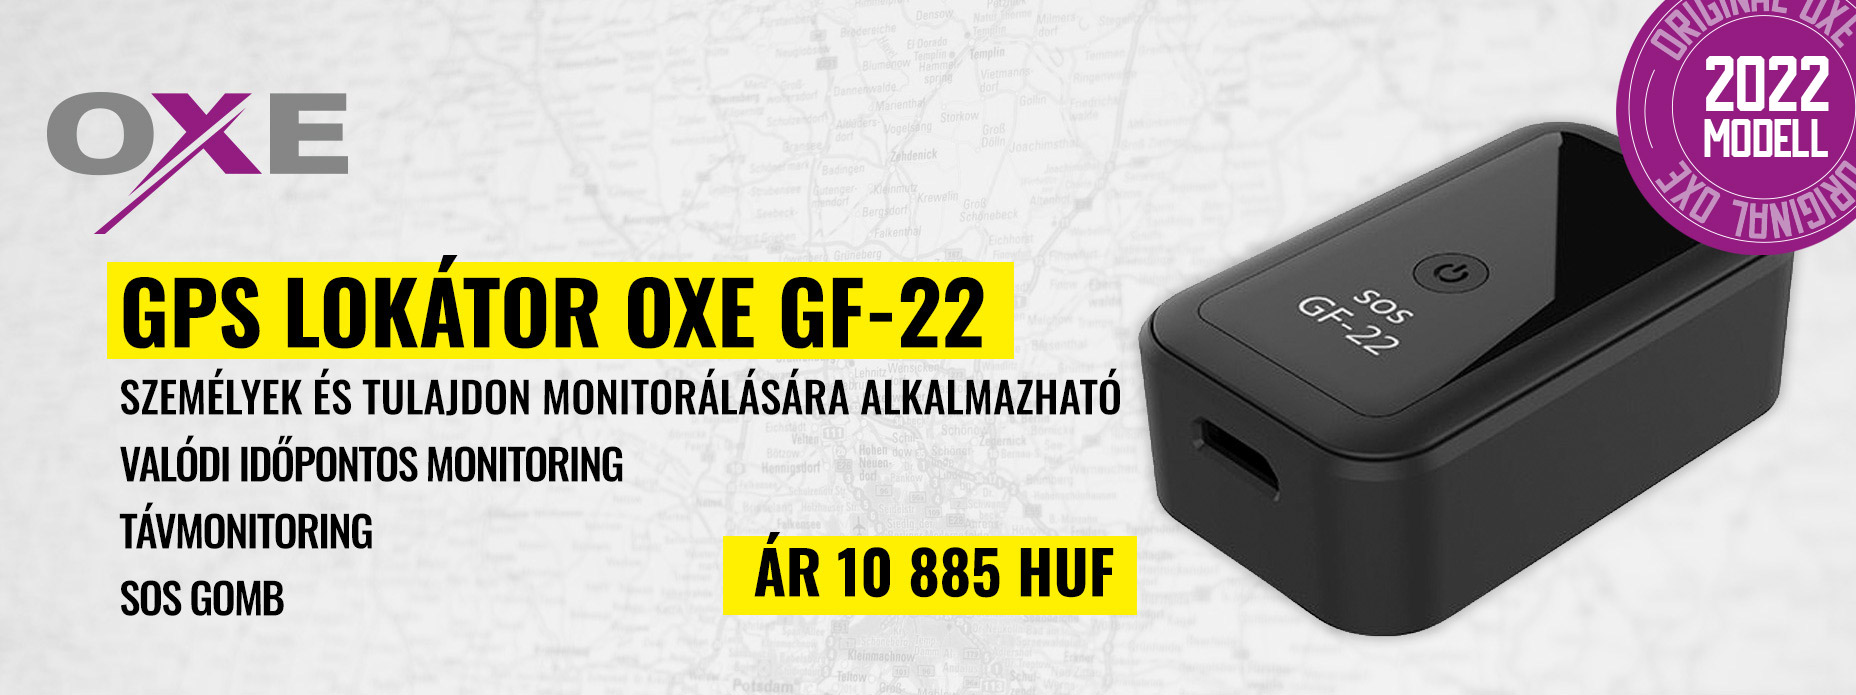 GPS lokátor OXE GF-22